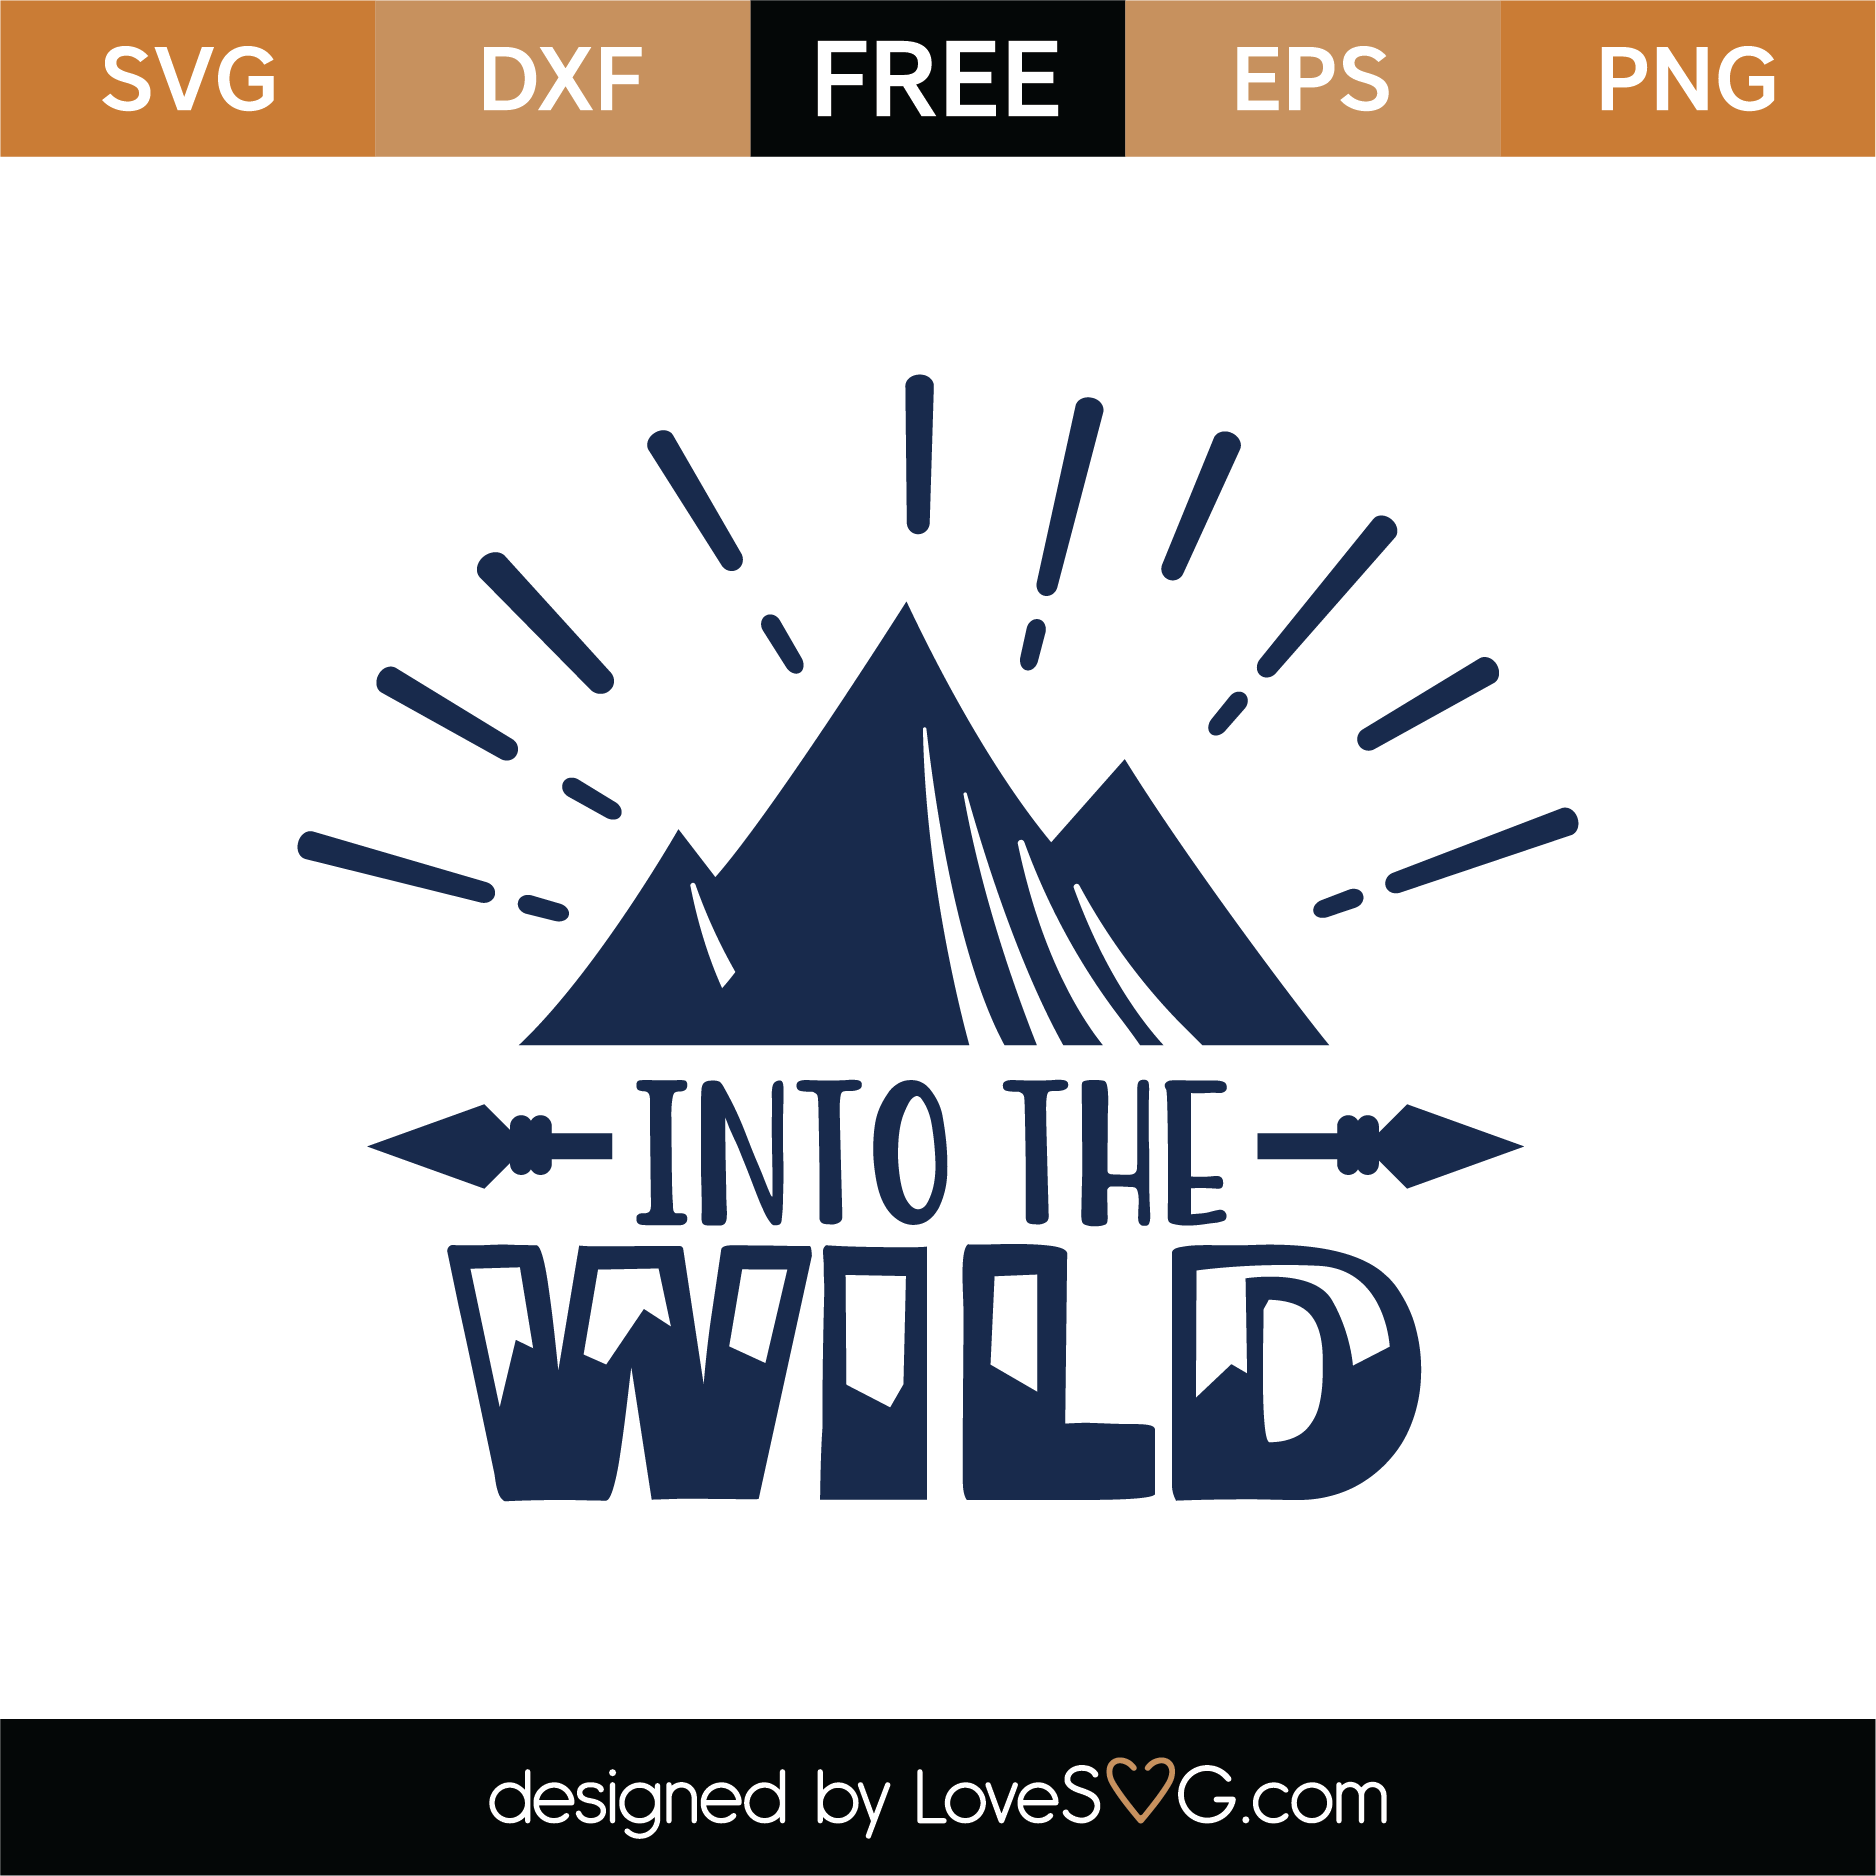 Free In To The Wild SVG Cut File | Lovesvg.com